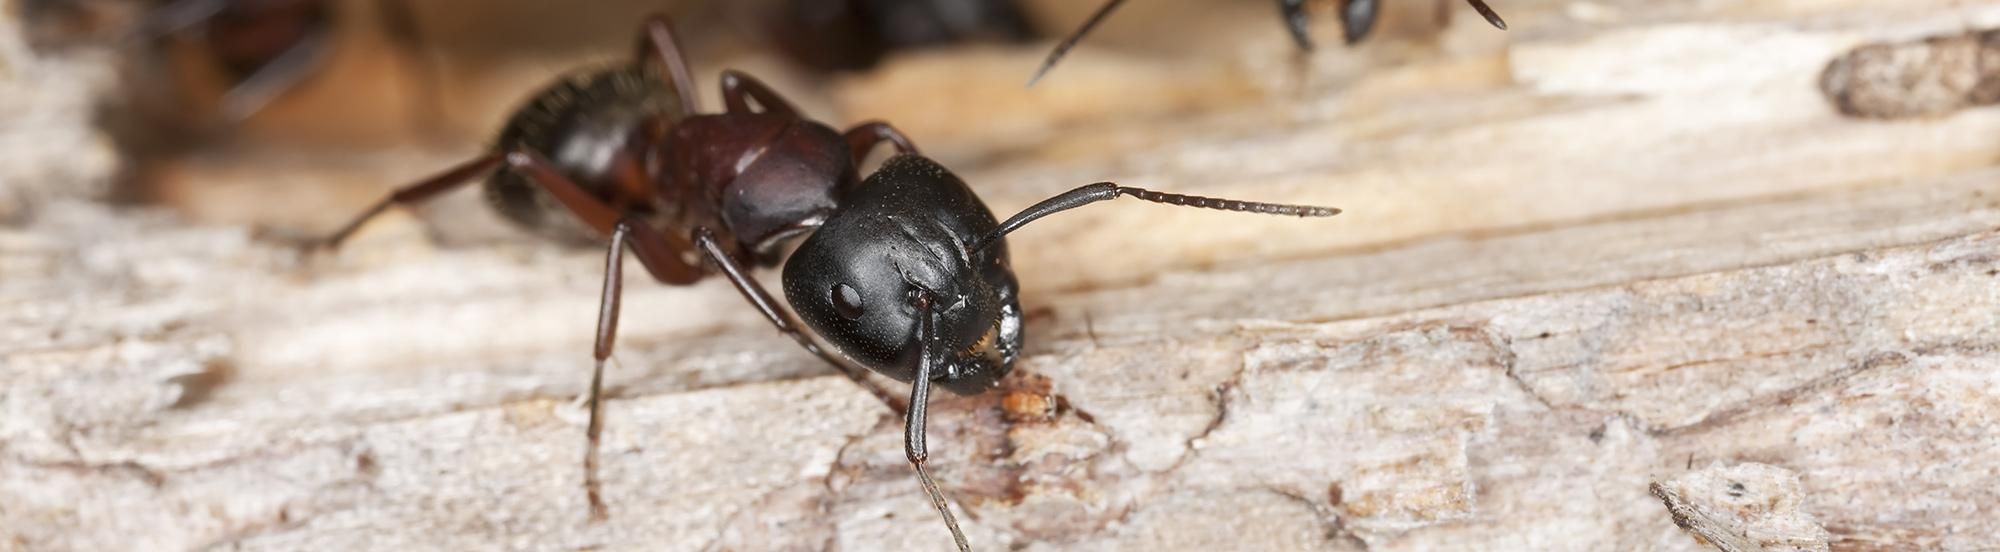 large black ant damaging wood